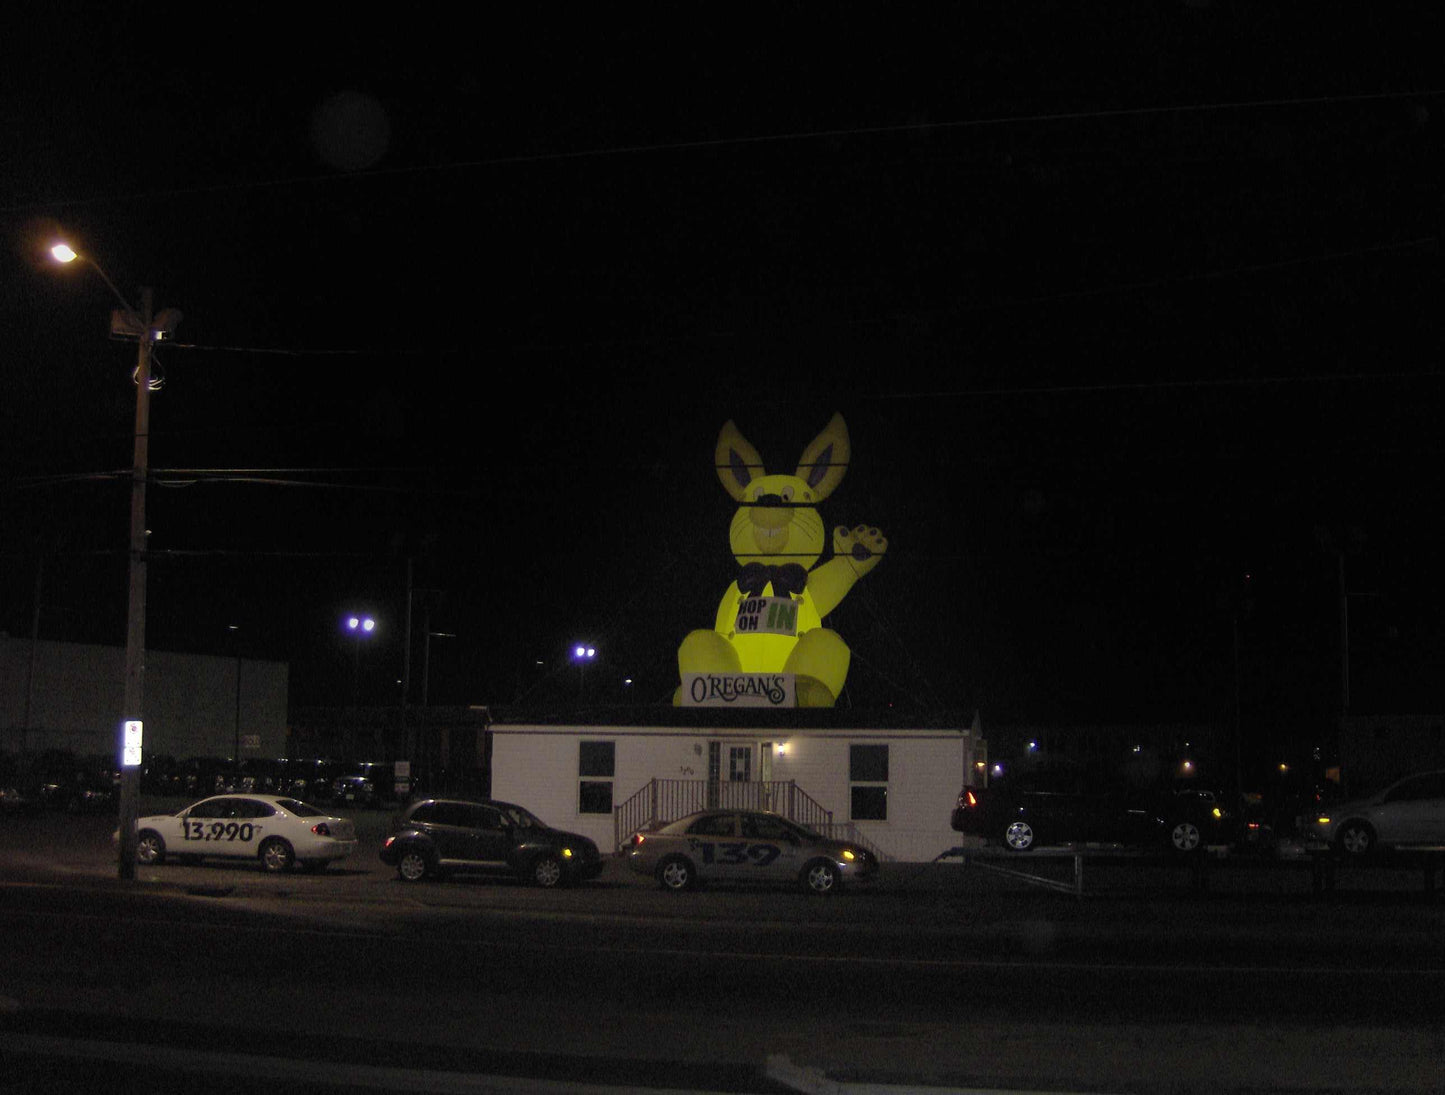 Yellow Cartoon Bunny Inflatable